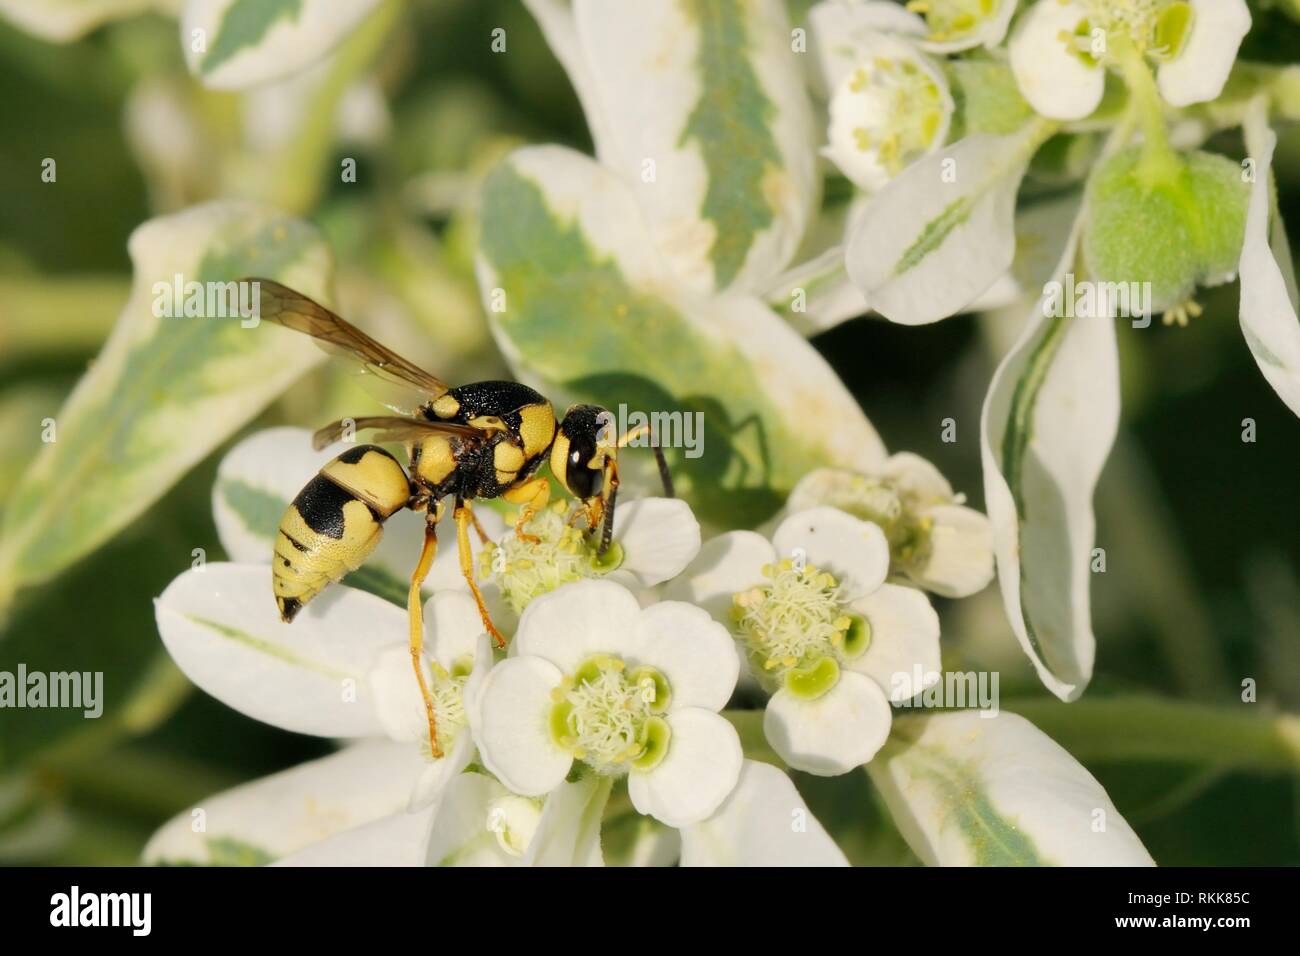 Potter wasp (Euodynerus sp.) feeding on Variegated spurge (Euphorbia marginata) flowers, Lesbos/ Lesvos, Greece, August. Stock Photo